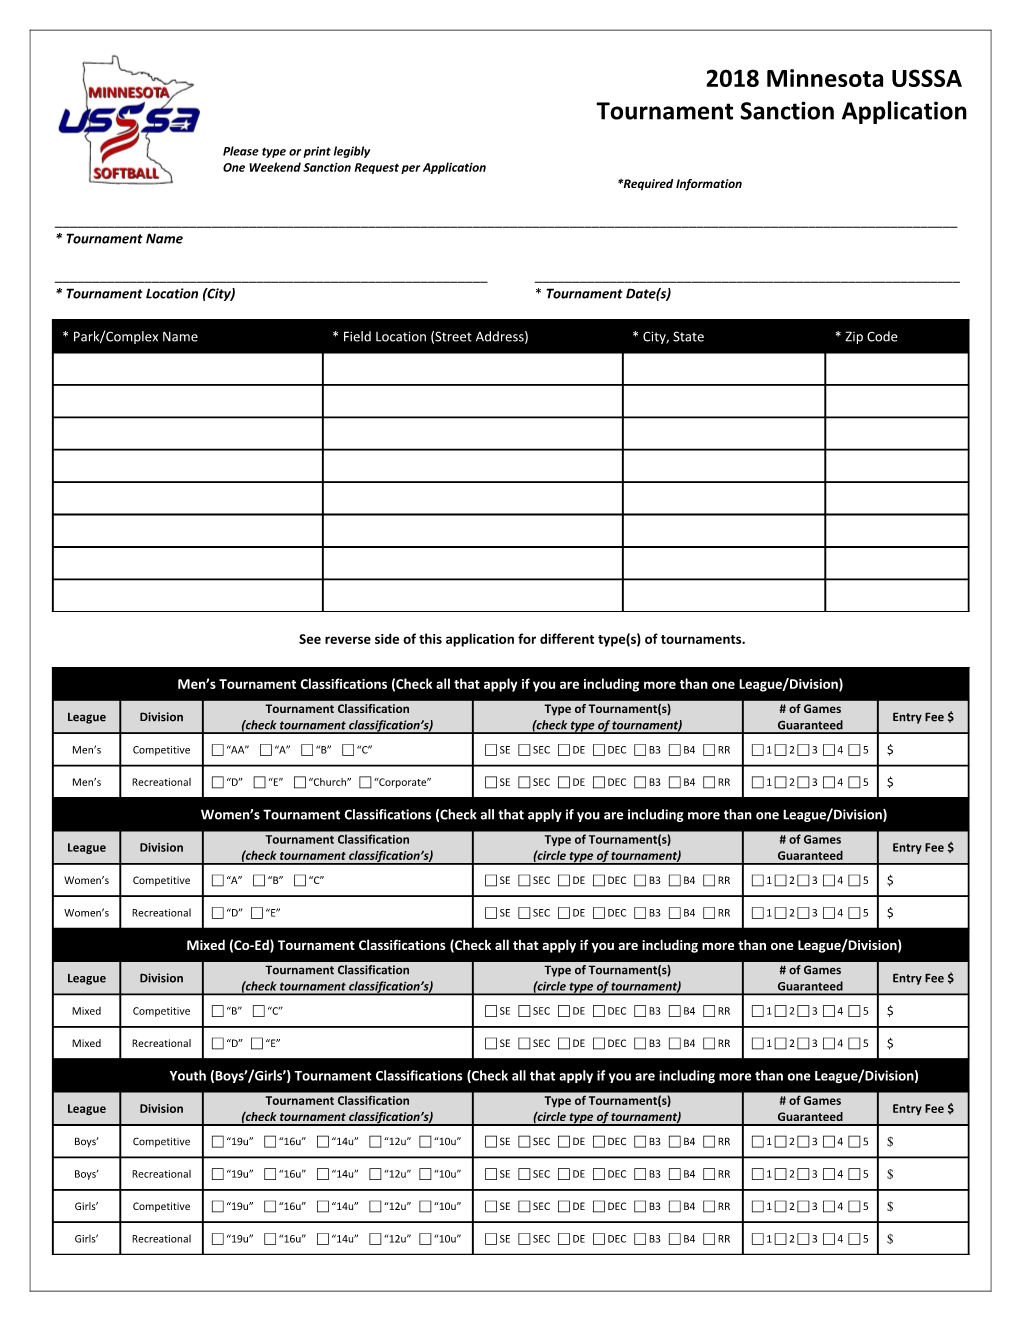 2018Minnesota USSSA Tournament Sanction Application